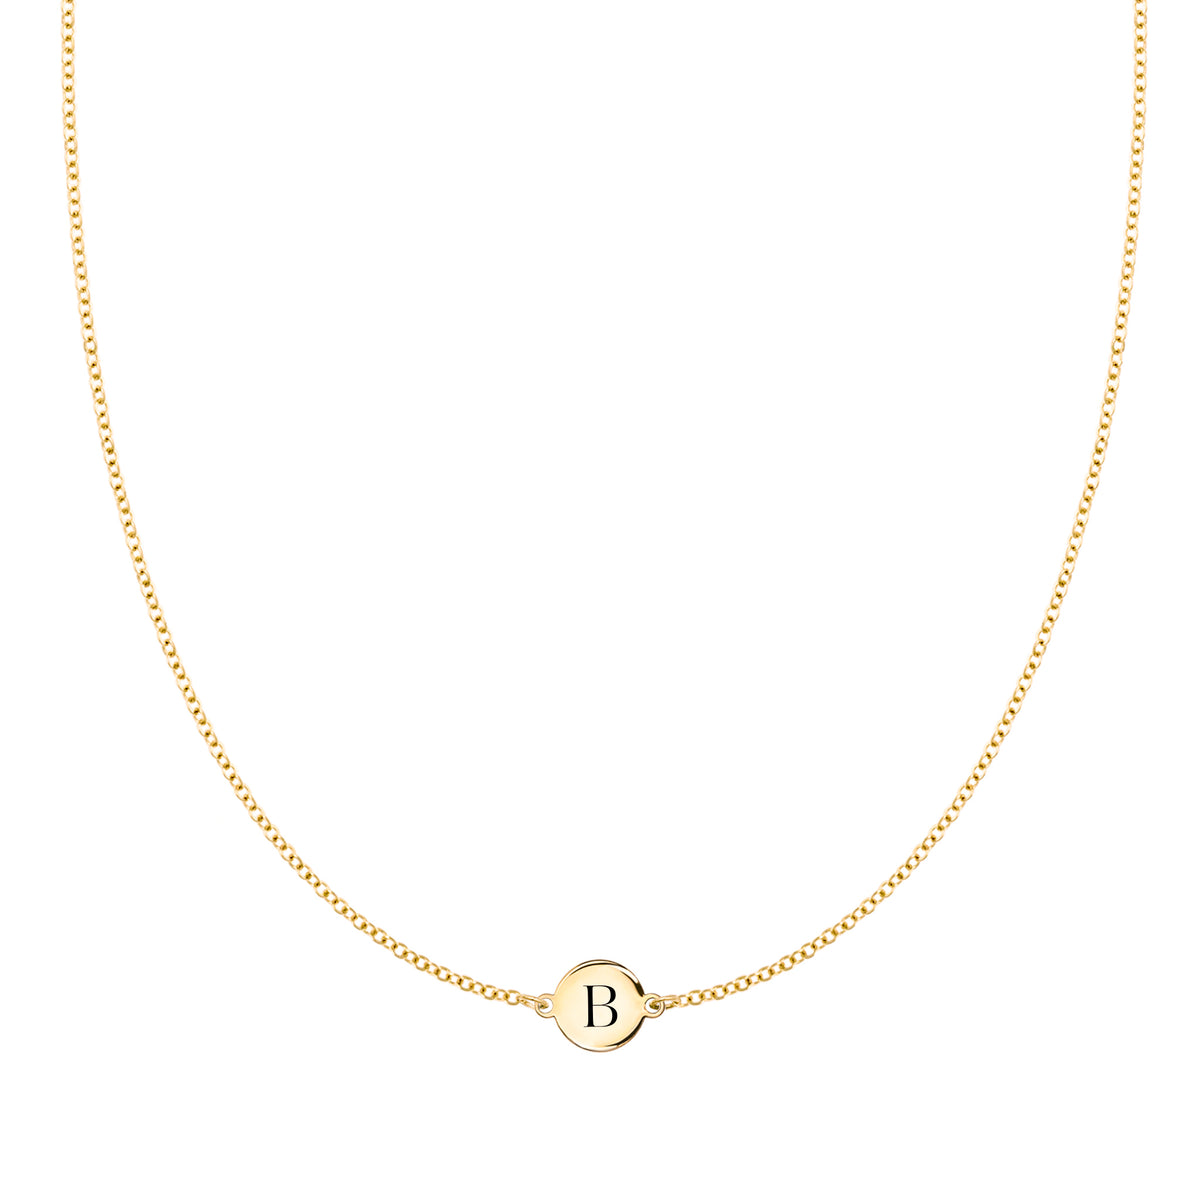 Tiffany & Co Elsa Peretti Sterling Silver Open Heart 16mm Pendant Necklace  | eBay